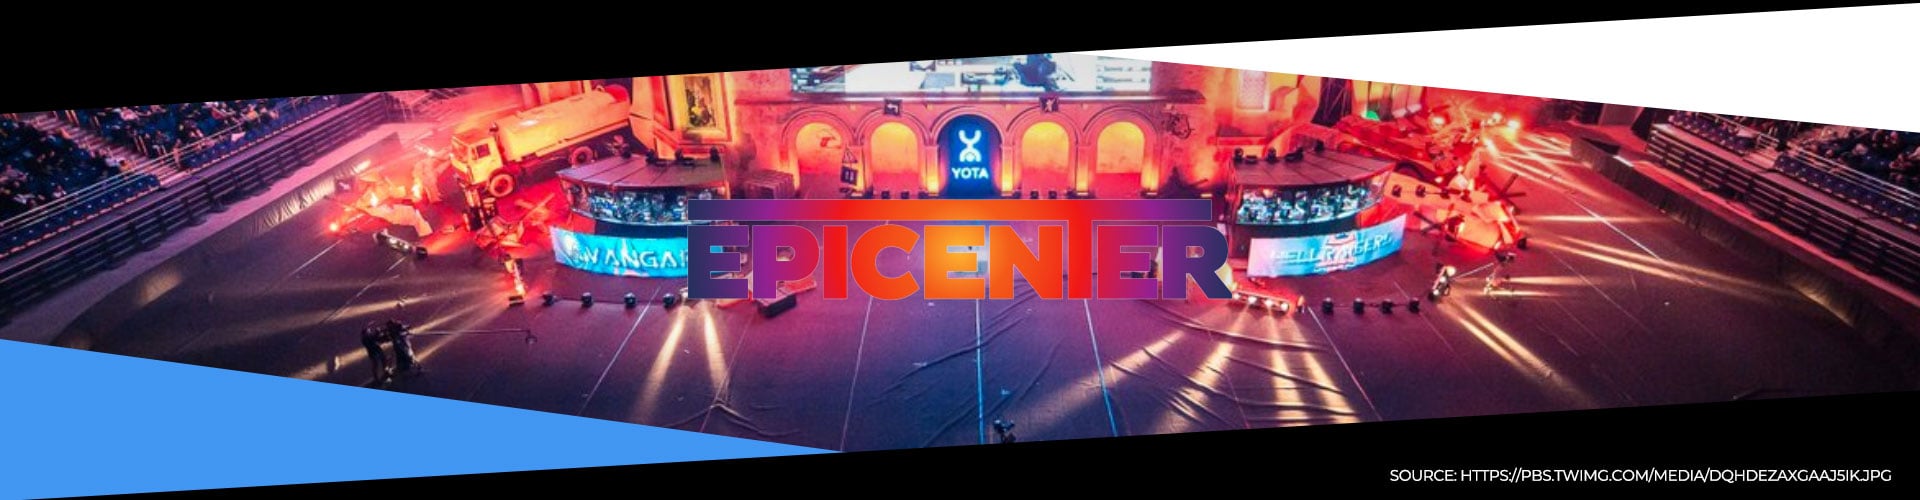 CS:GO Epicenter 2019 Preview Article